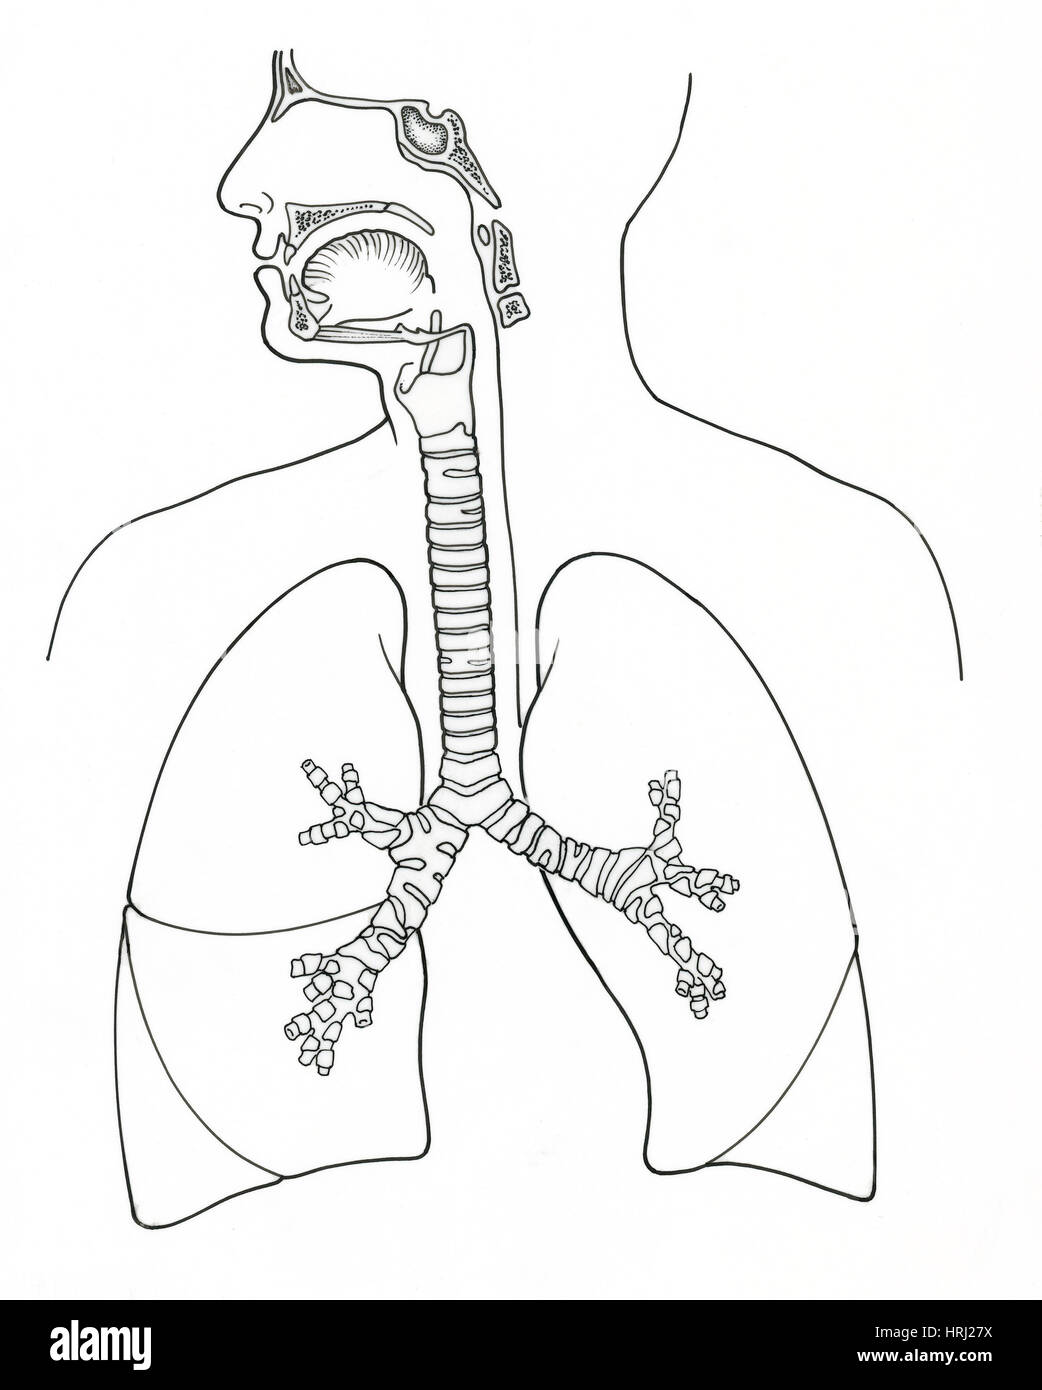 Illustration of Respiratory System Stock Photo